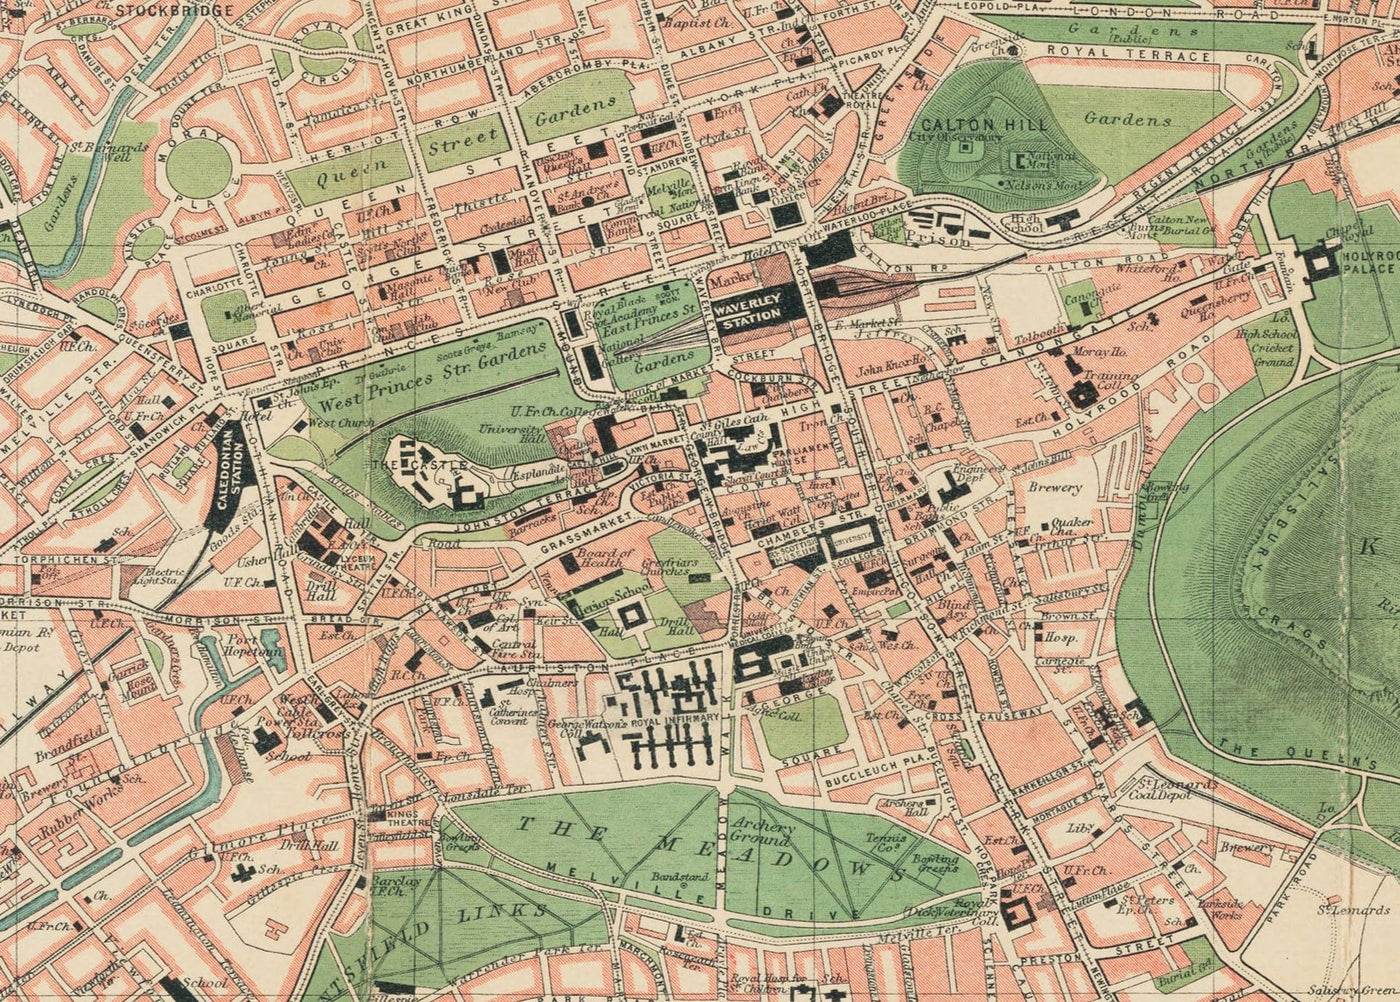 Rare Old Map of Edinburgh - Bartholomew's Pocket Plan, 1921 - Leith, Murrayfield, Portobello, Morningside